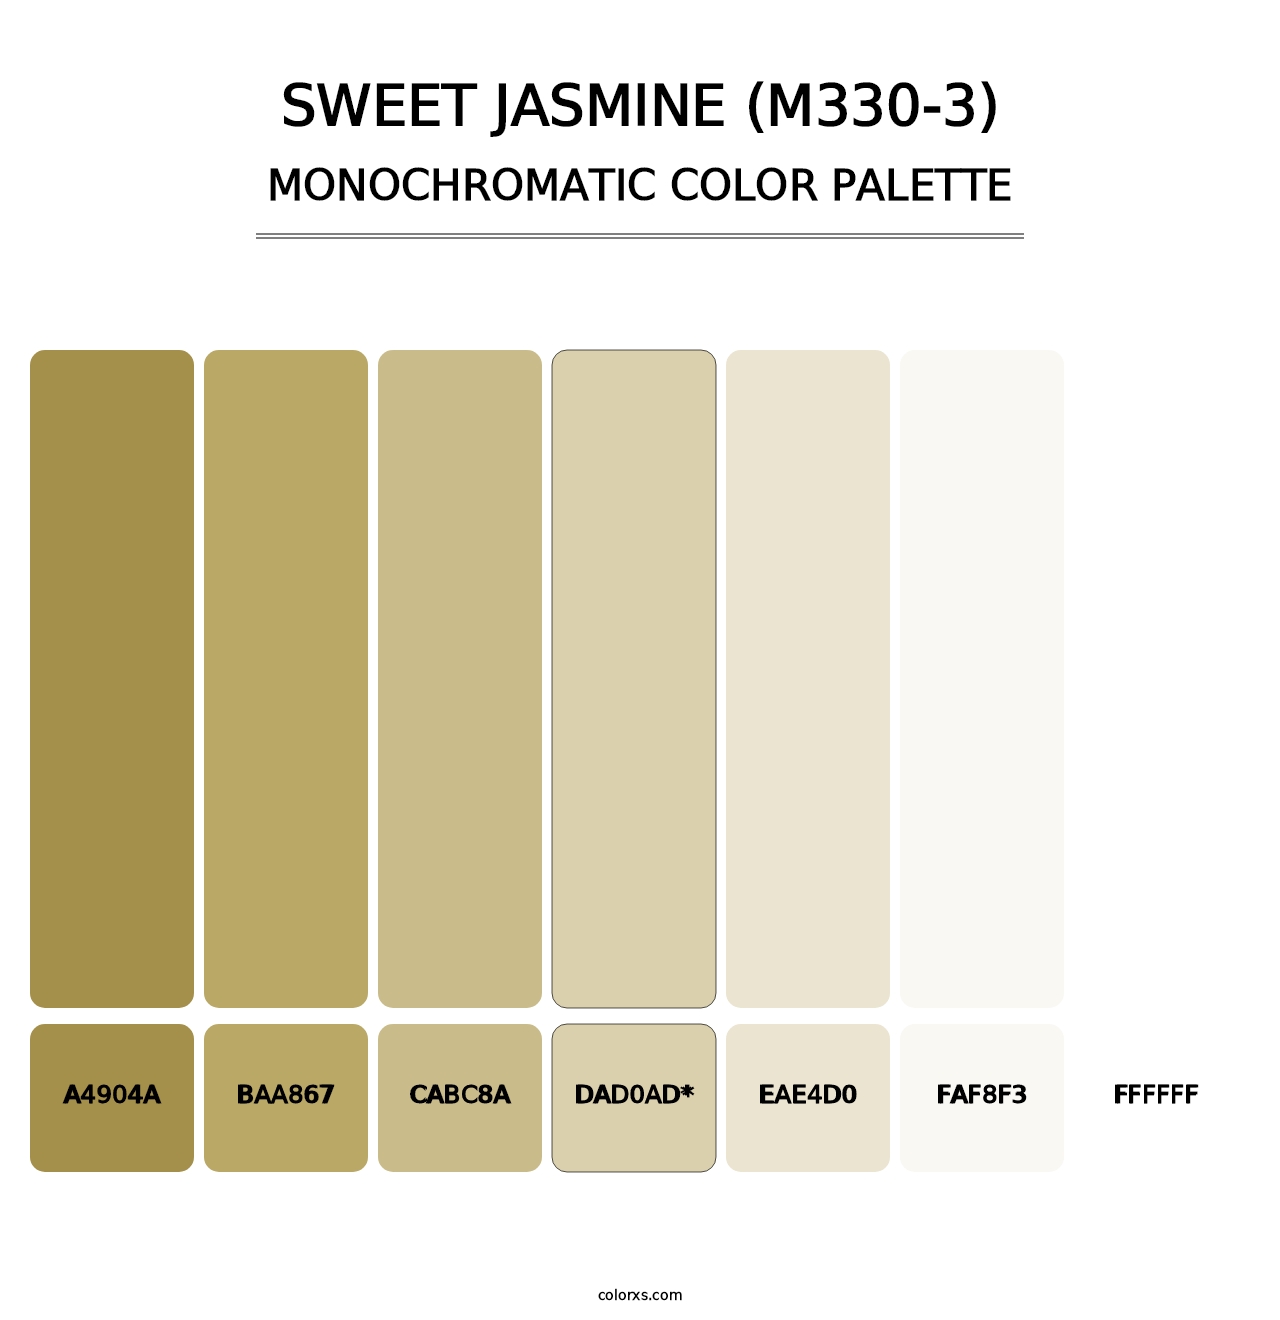 Sweet Jasmine (M330-3) - Monochromatic Color Palette